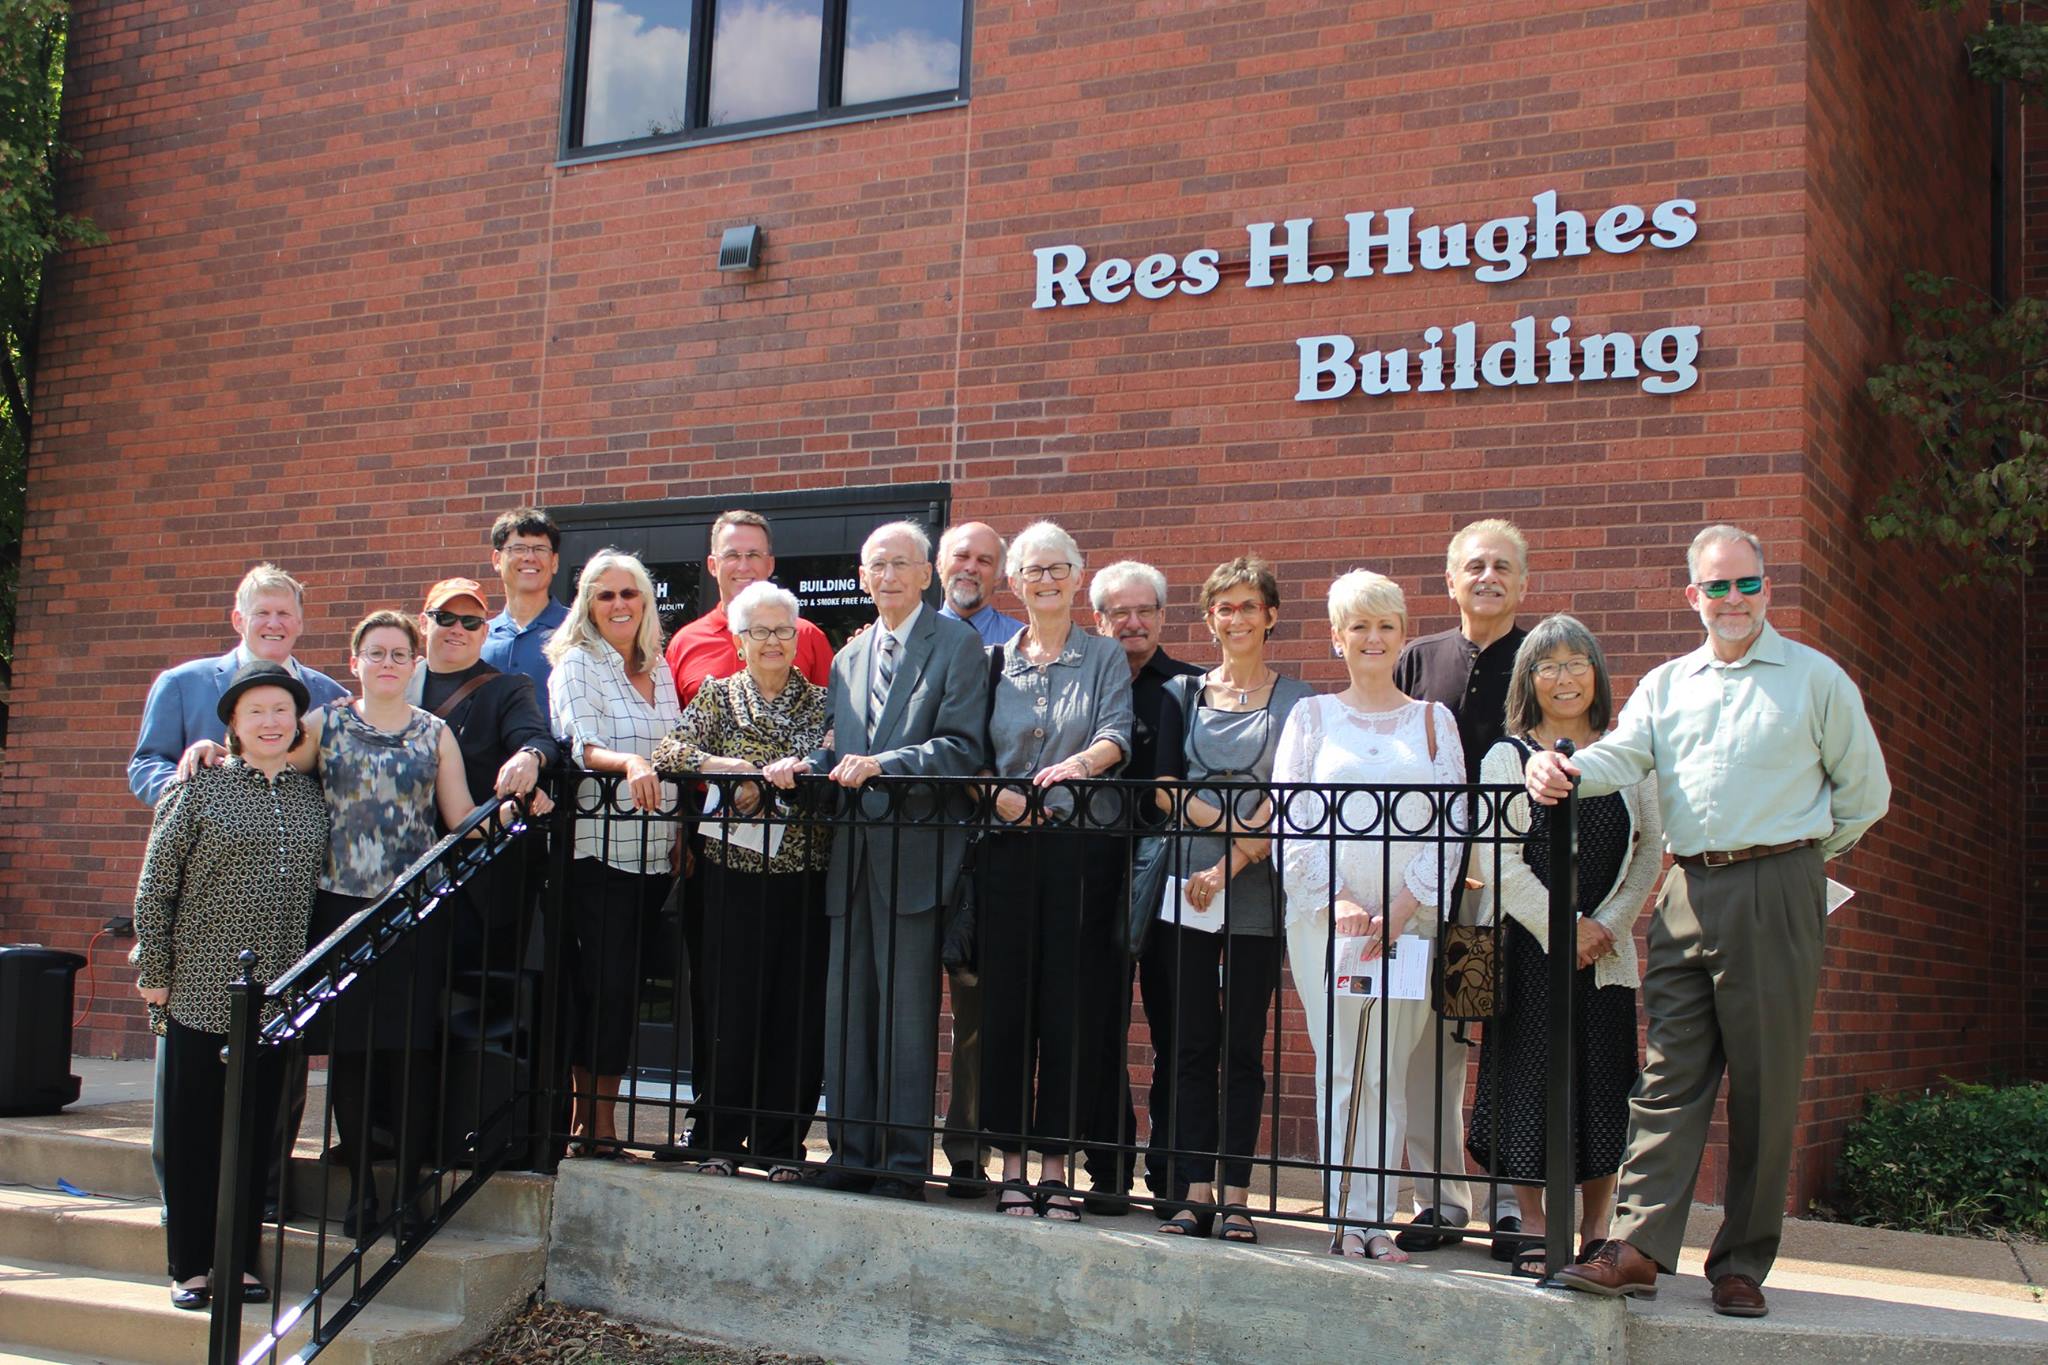 Rees H. Hughes Building